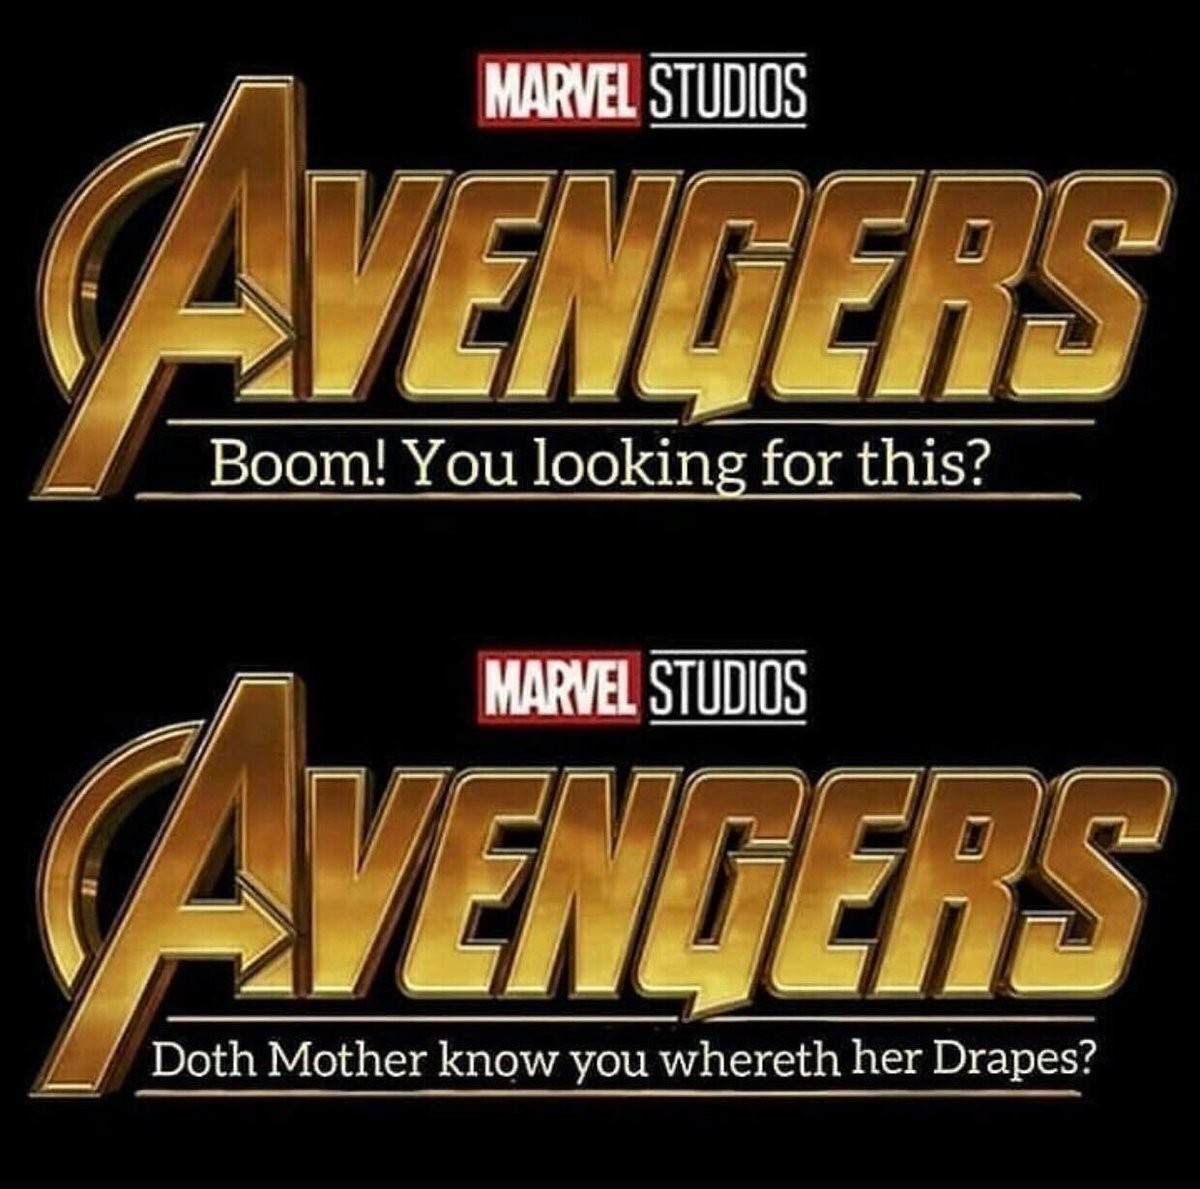 Avengers 4 Title